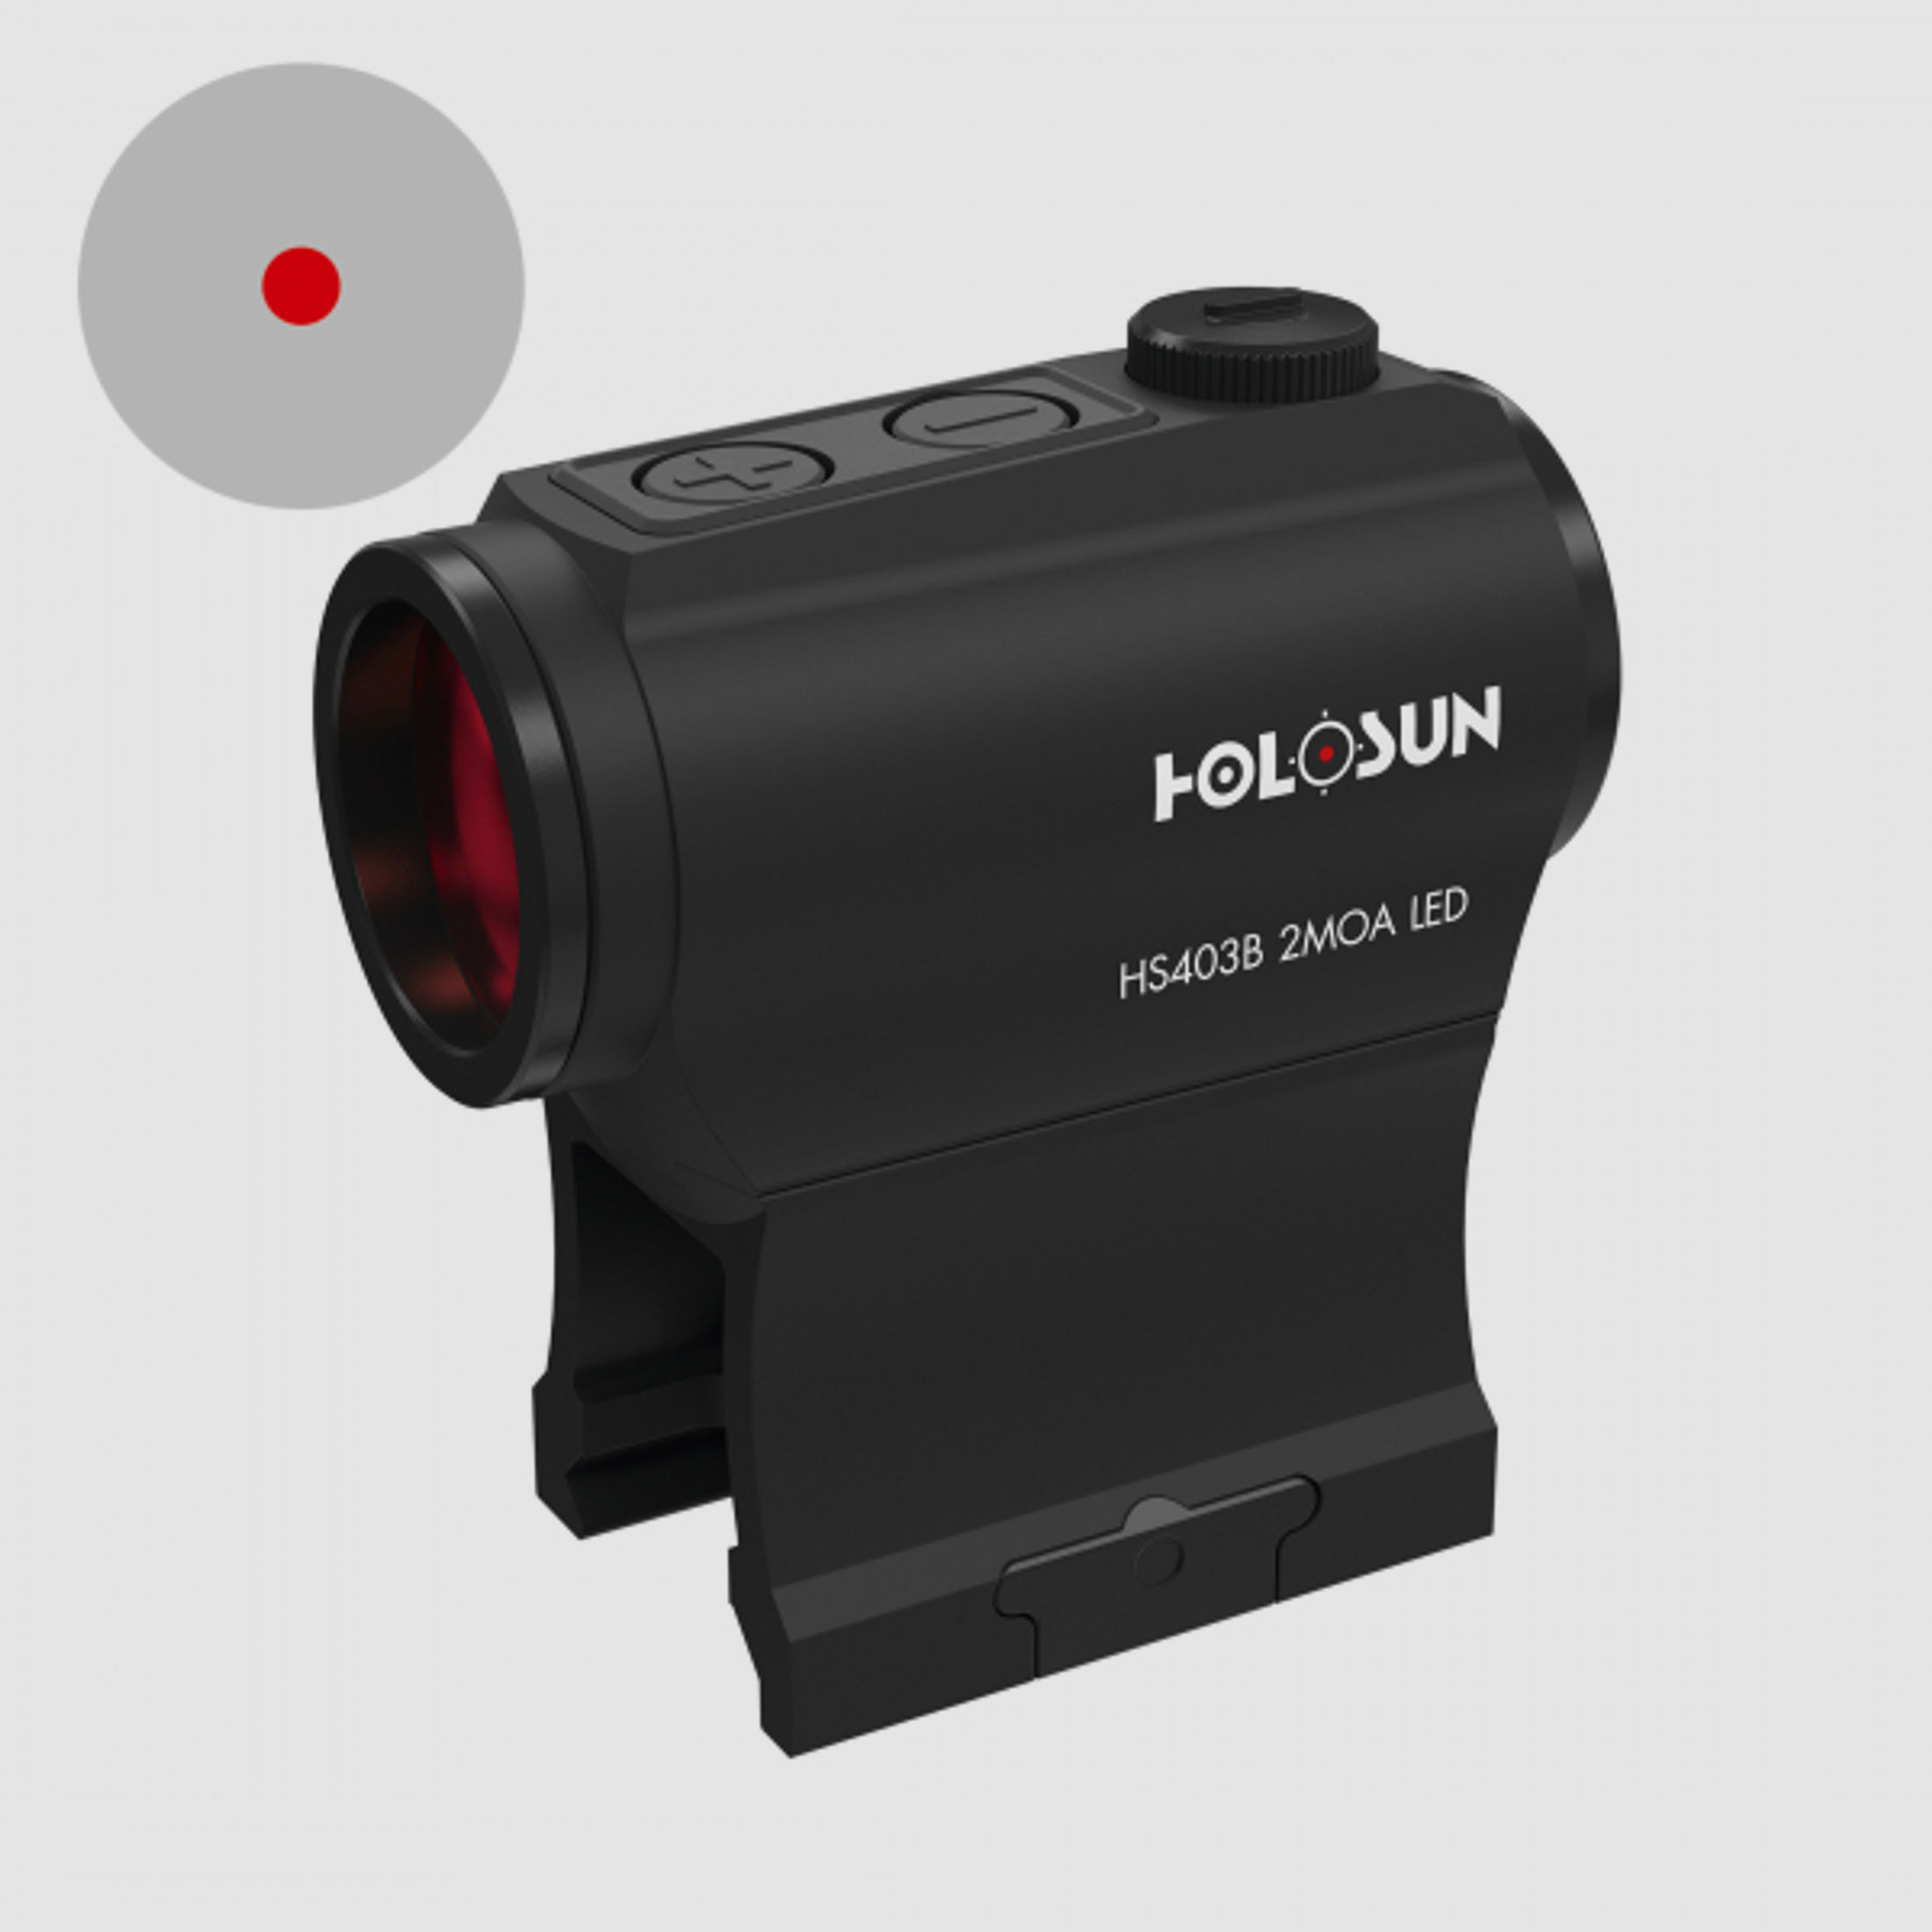 Holosun HS403B Microdot Rotpunktvisier mit 2MOA Punkt Absehen, schwarz, Picatinny/Weaver Schiene